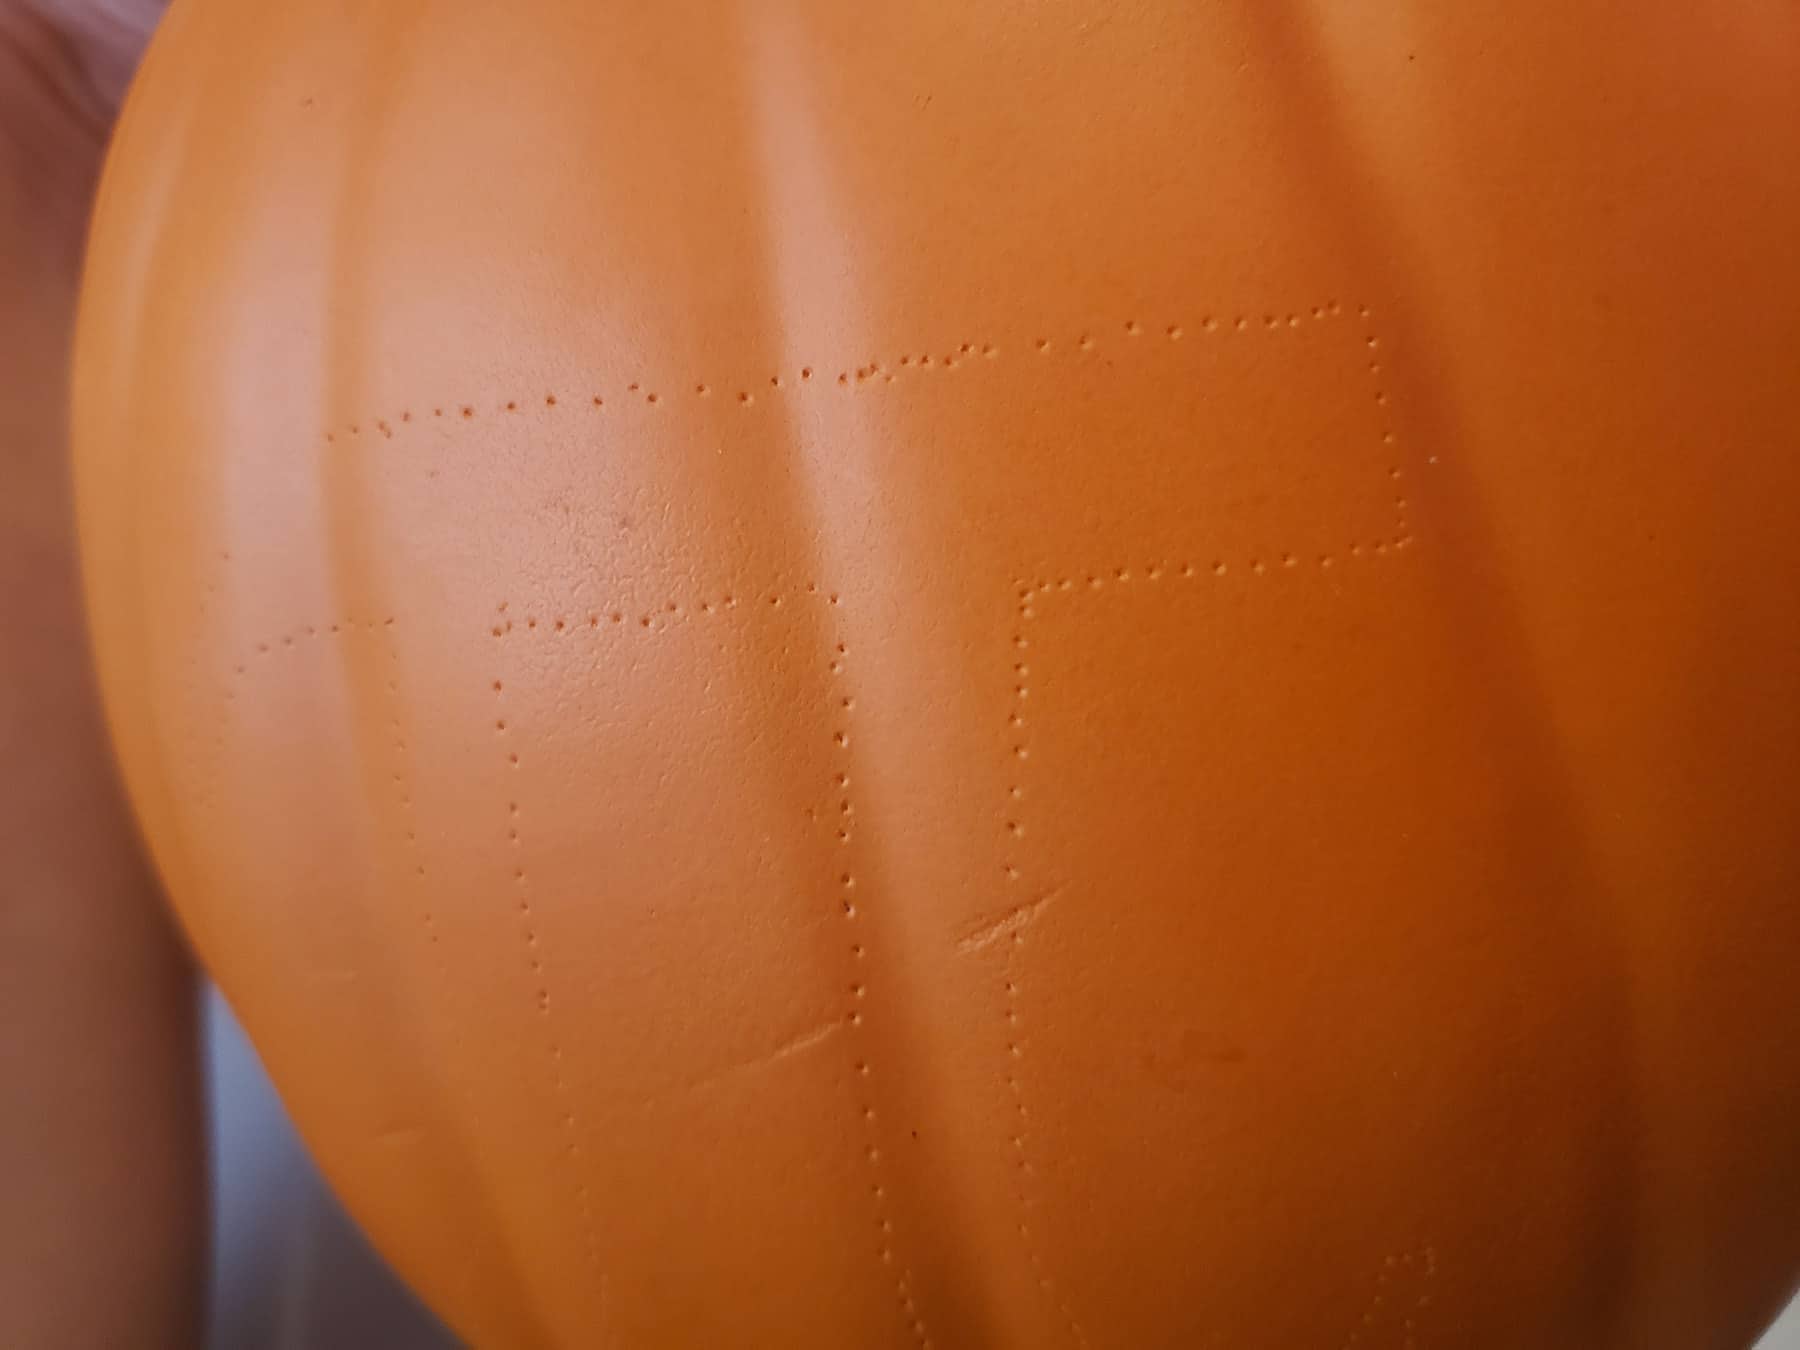 A close up view of a foam pumpkin with a pi symbol traced onto it, via pin pricks.